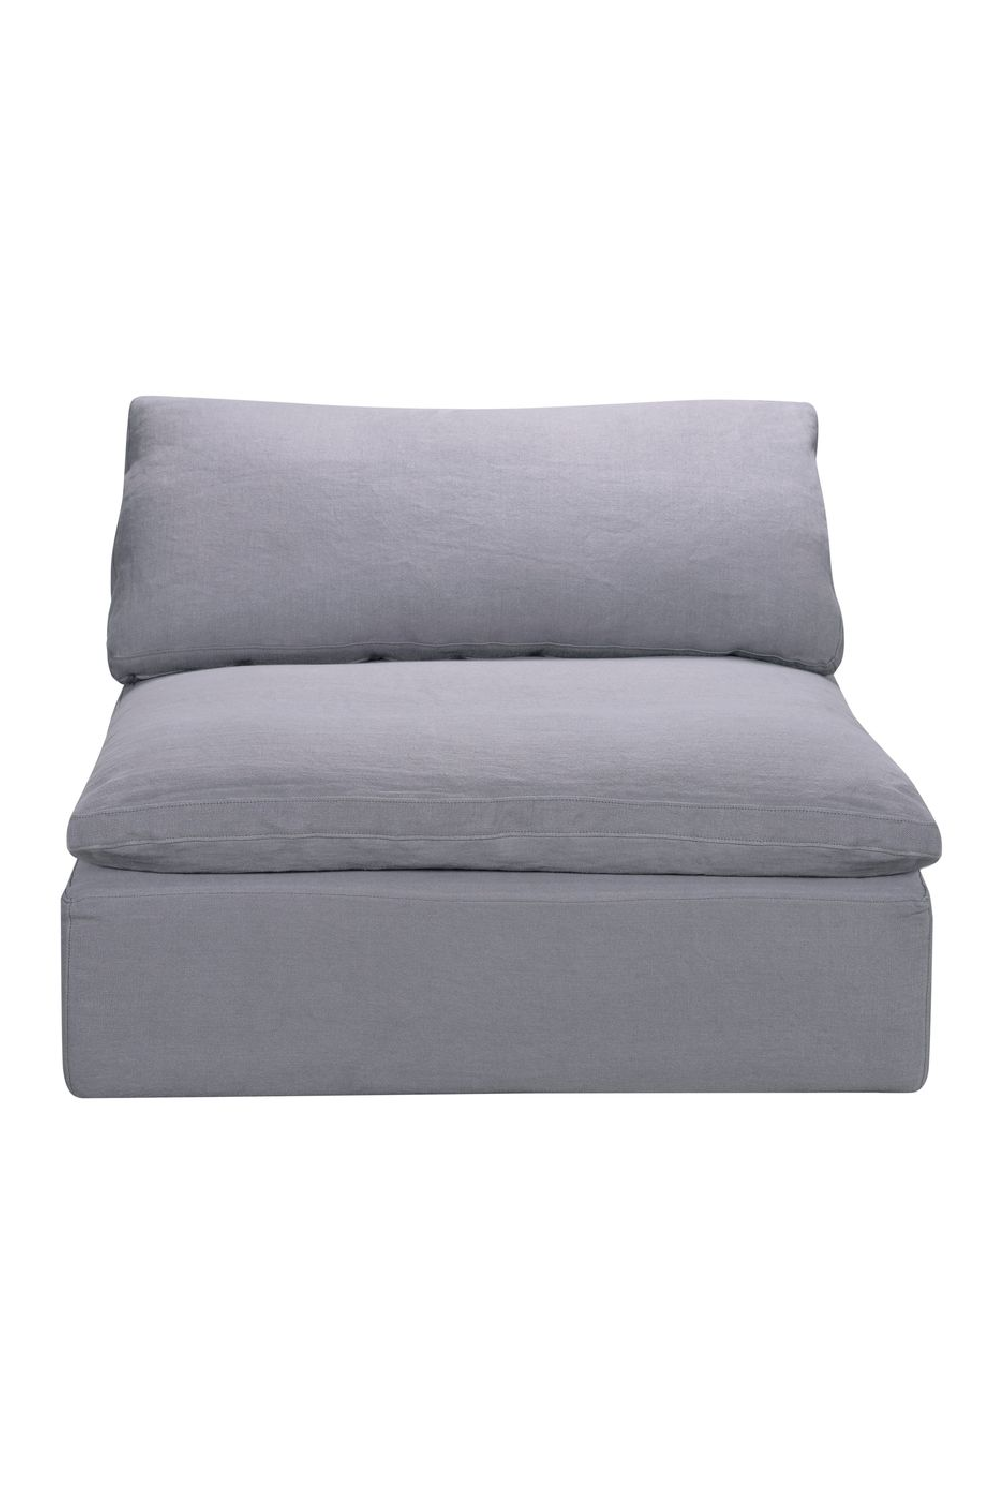 Gray Cotton Sectional Sofa L | Andrew Martin Truman | Oroa.com